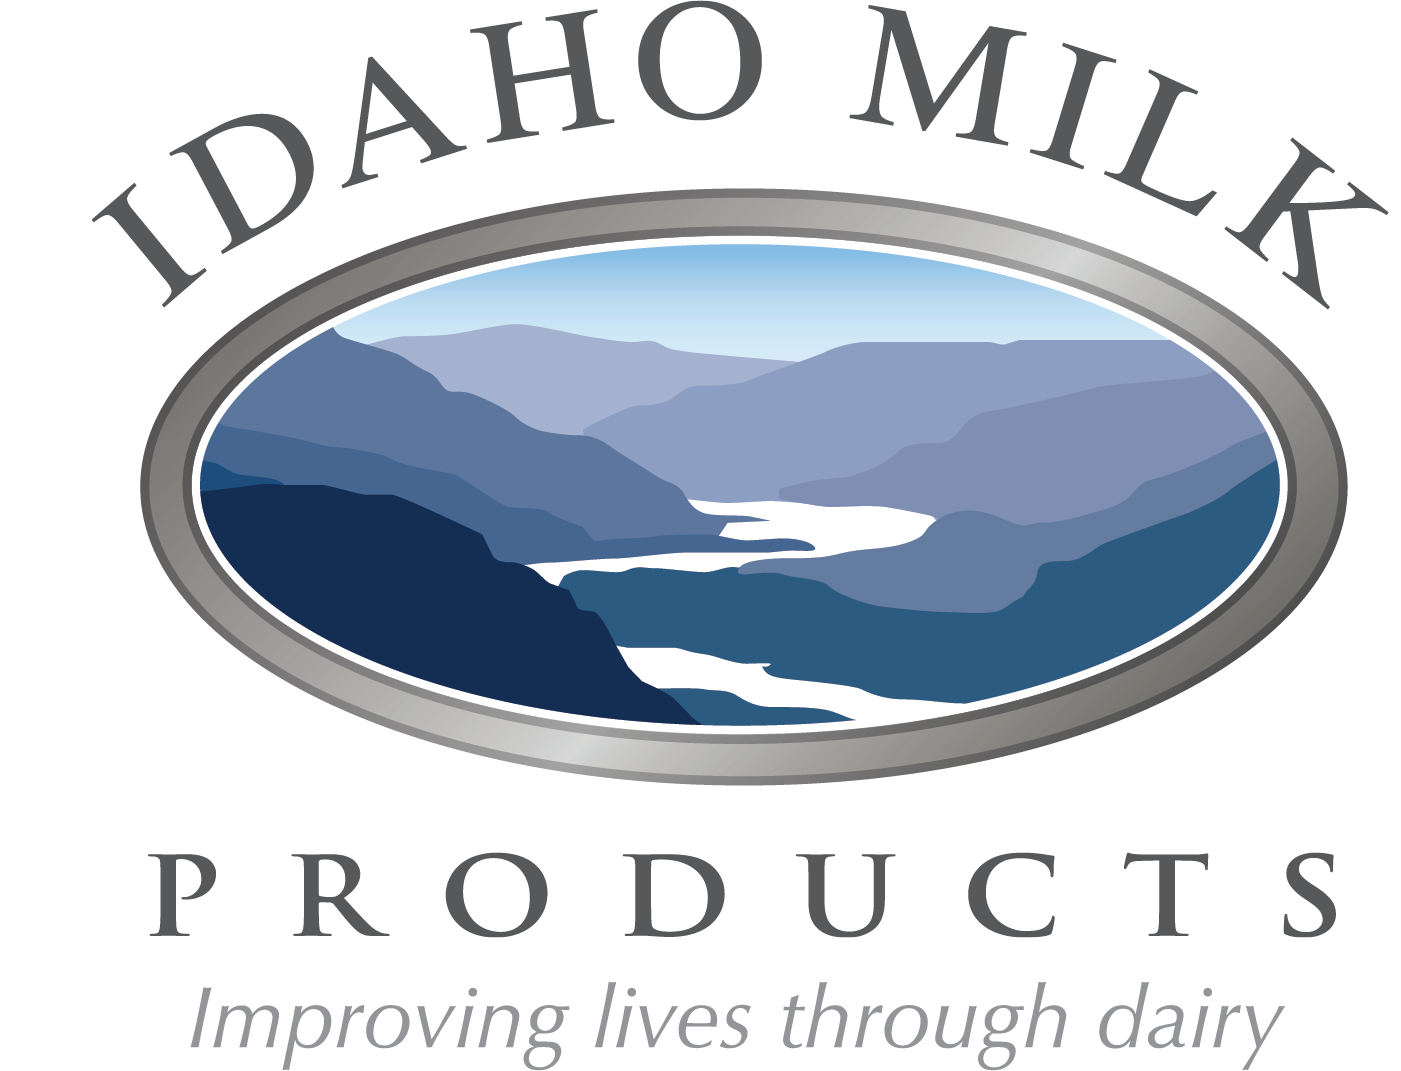 Idaho Milk Products 